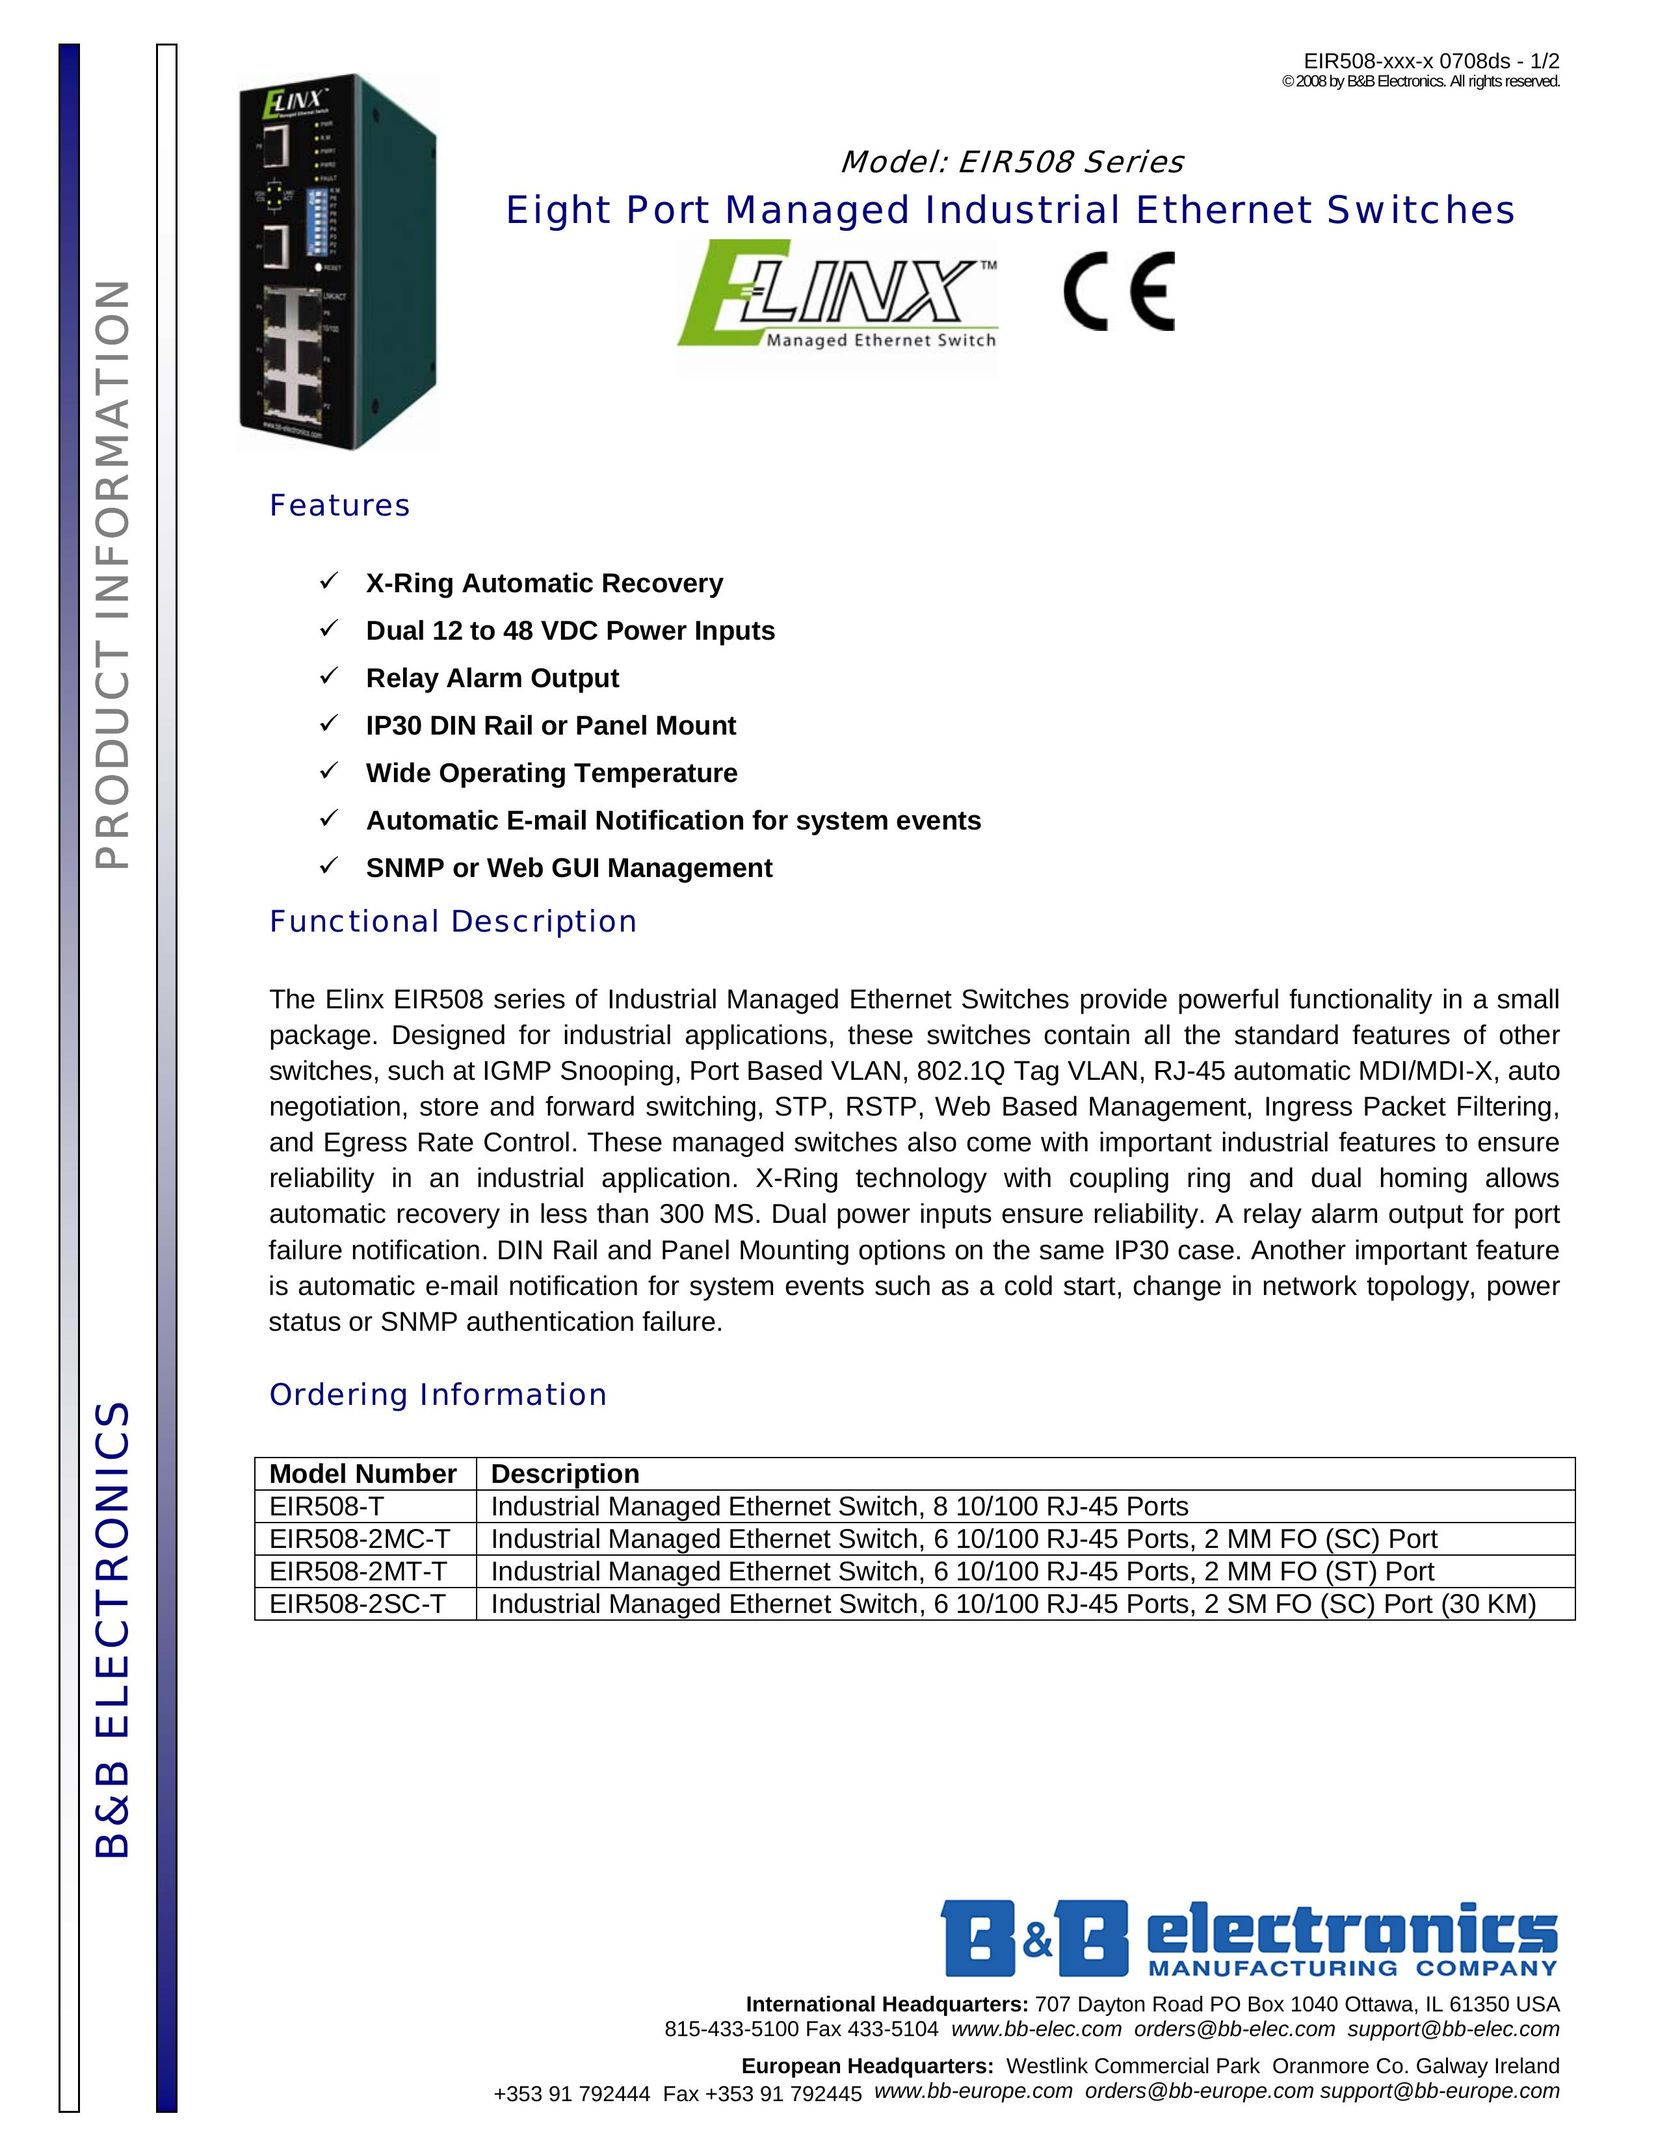 B&B Electronics EIR508-T Switch User Manual